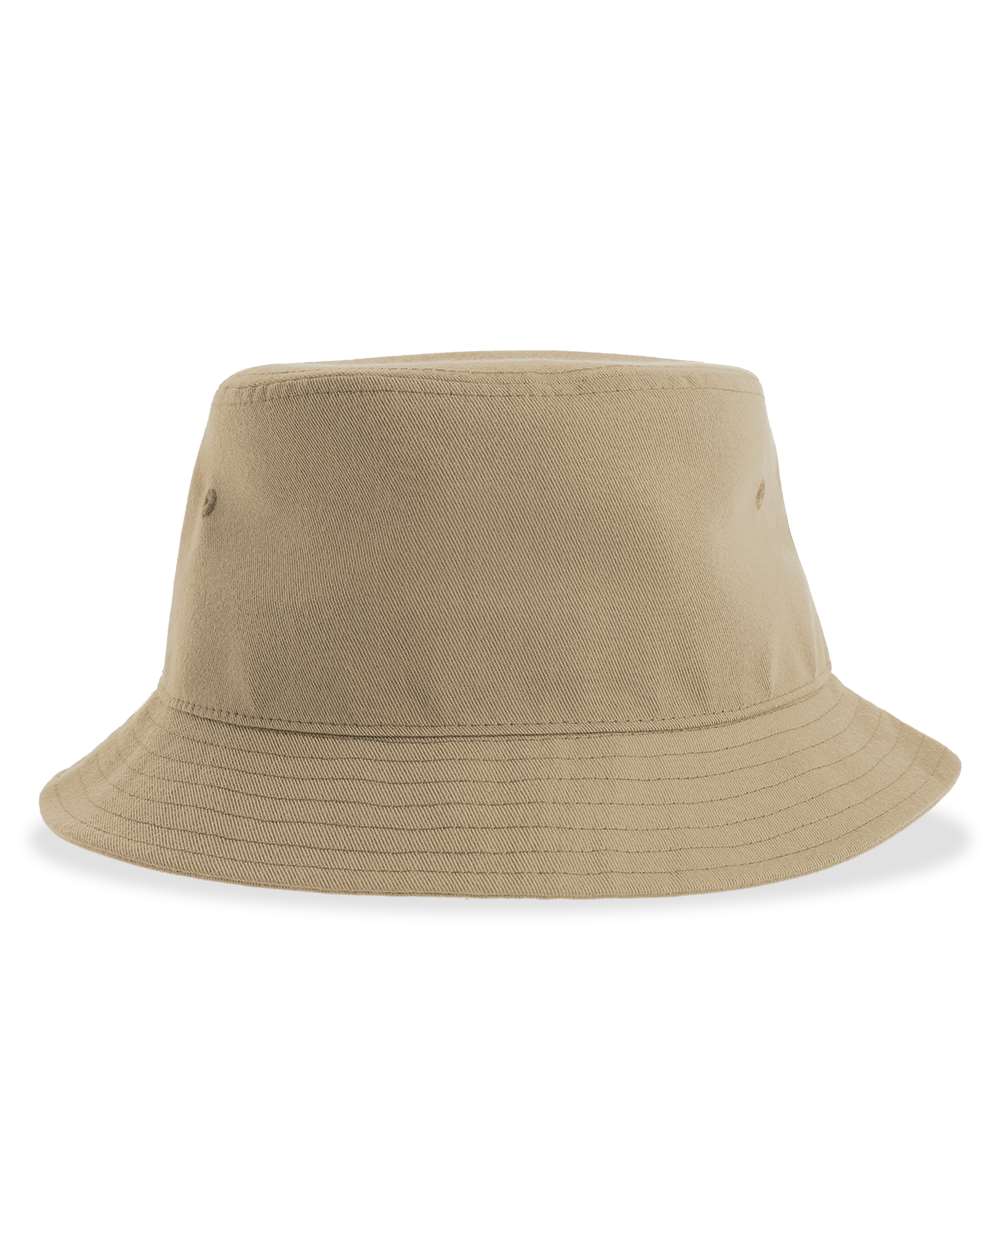 Customizable Atlantis Headwear Geob Bucket Hat in khaki